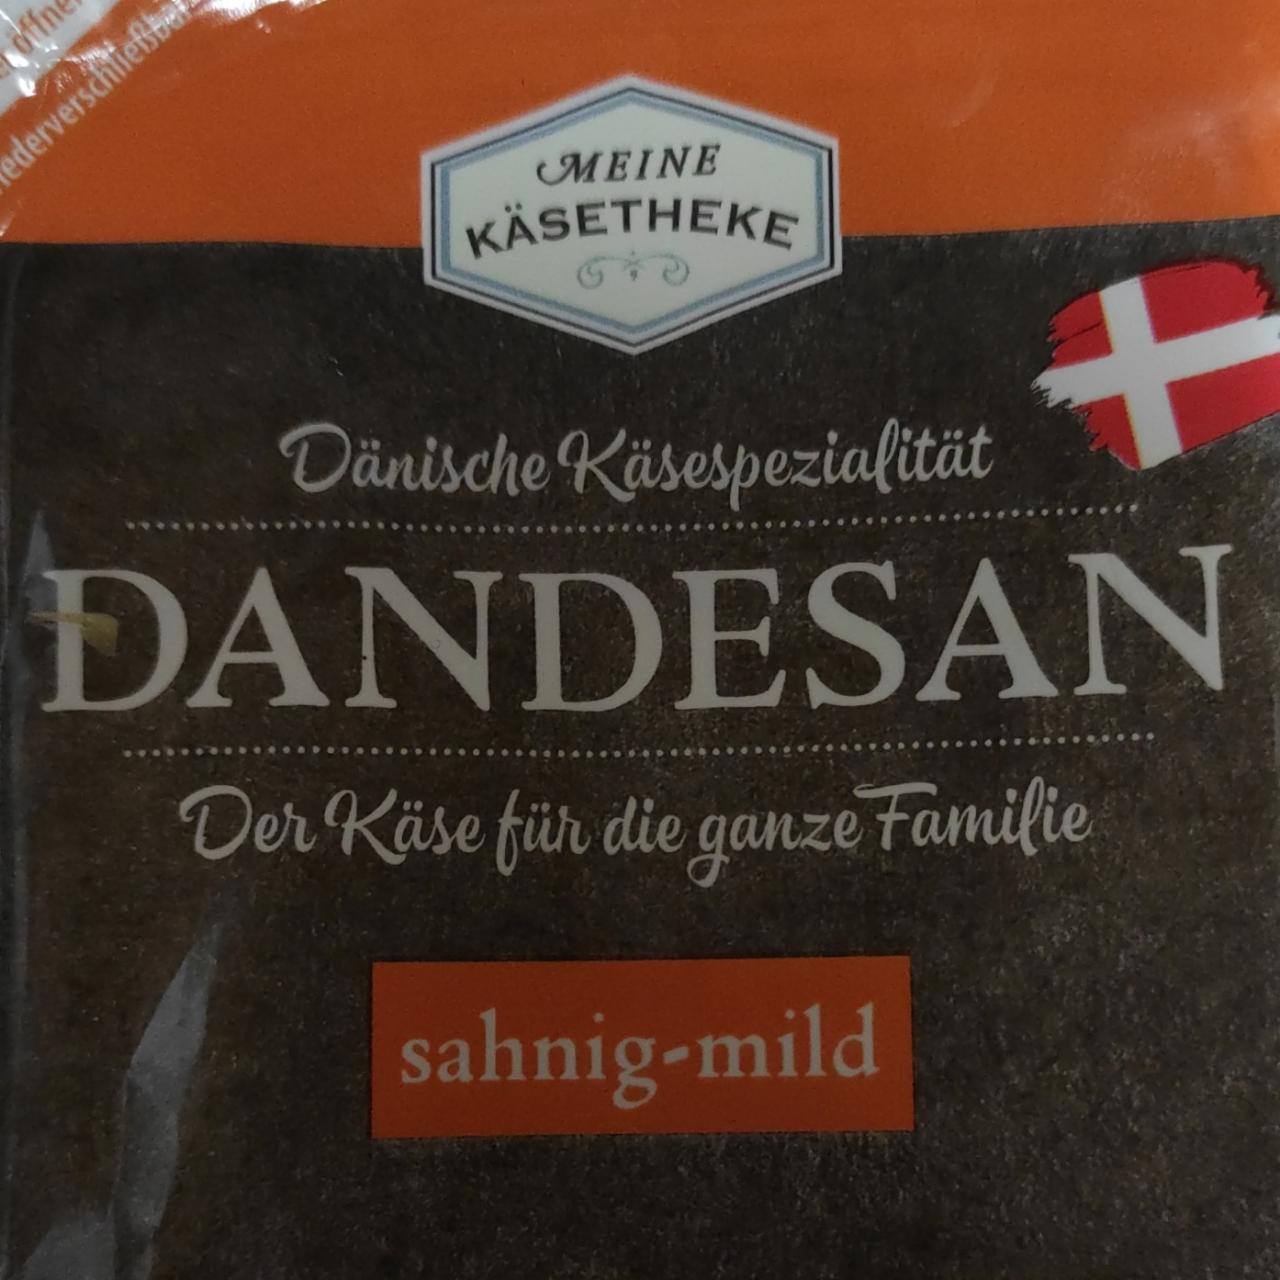 Фото - Сыр 45% Dänische Käsespezialität Dandesan sahnig-mild Meine Käsetheke